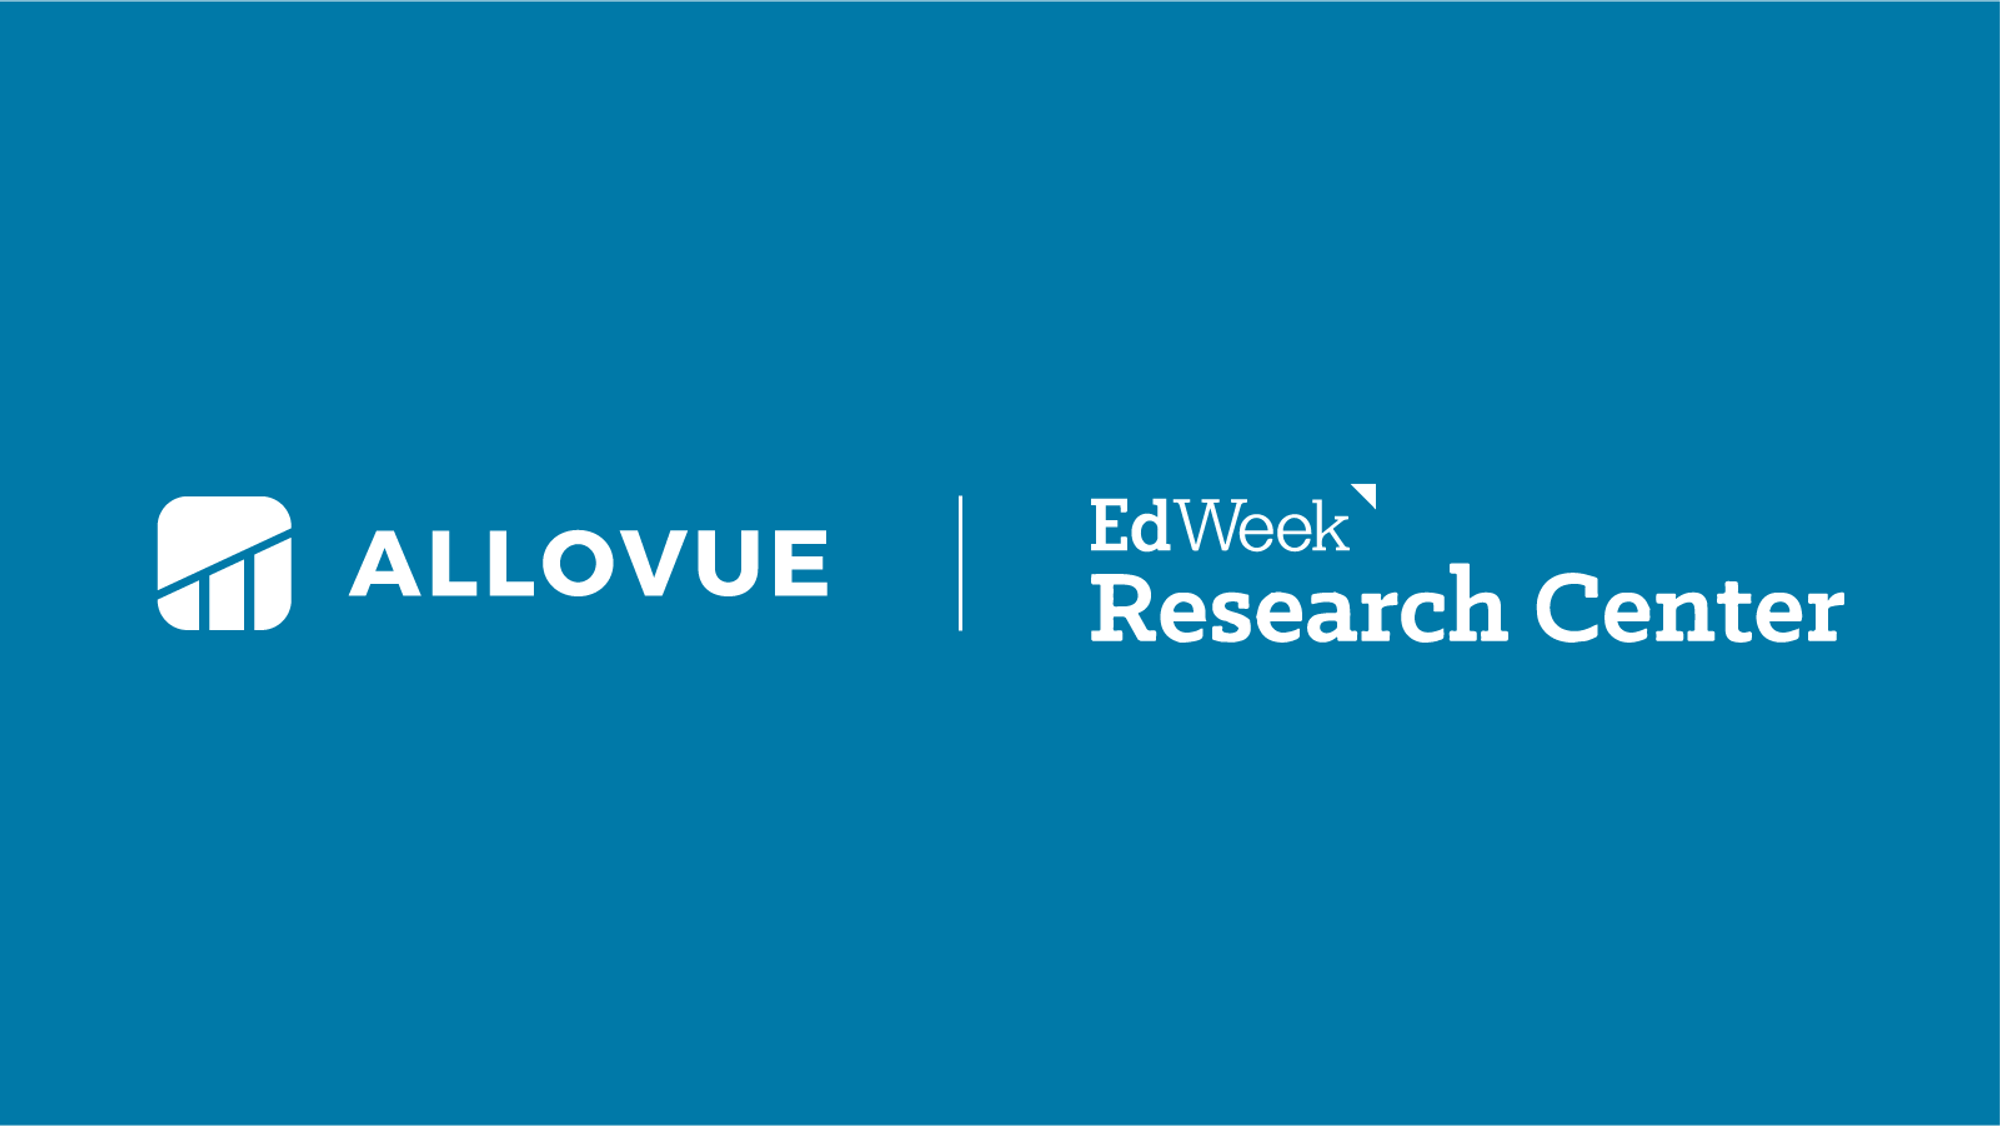 Allovue-Edweek-Logos